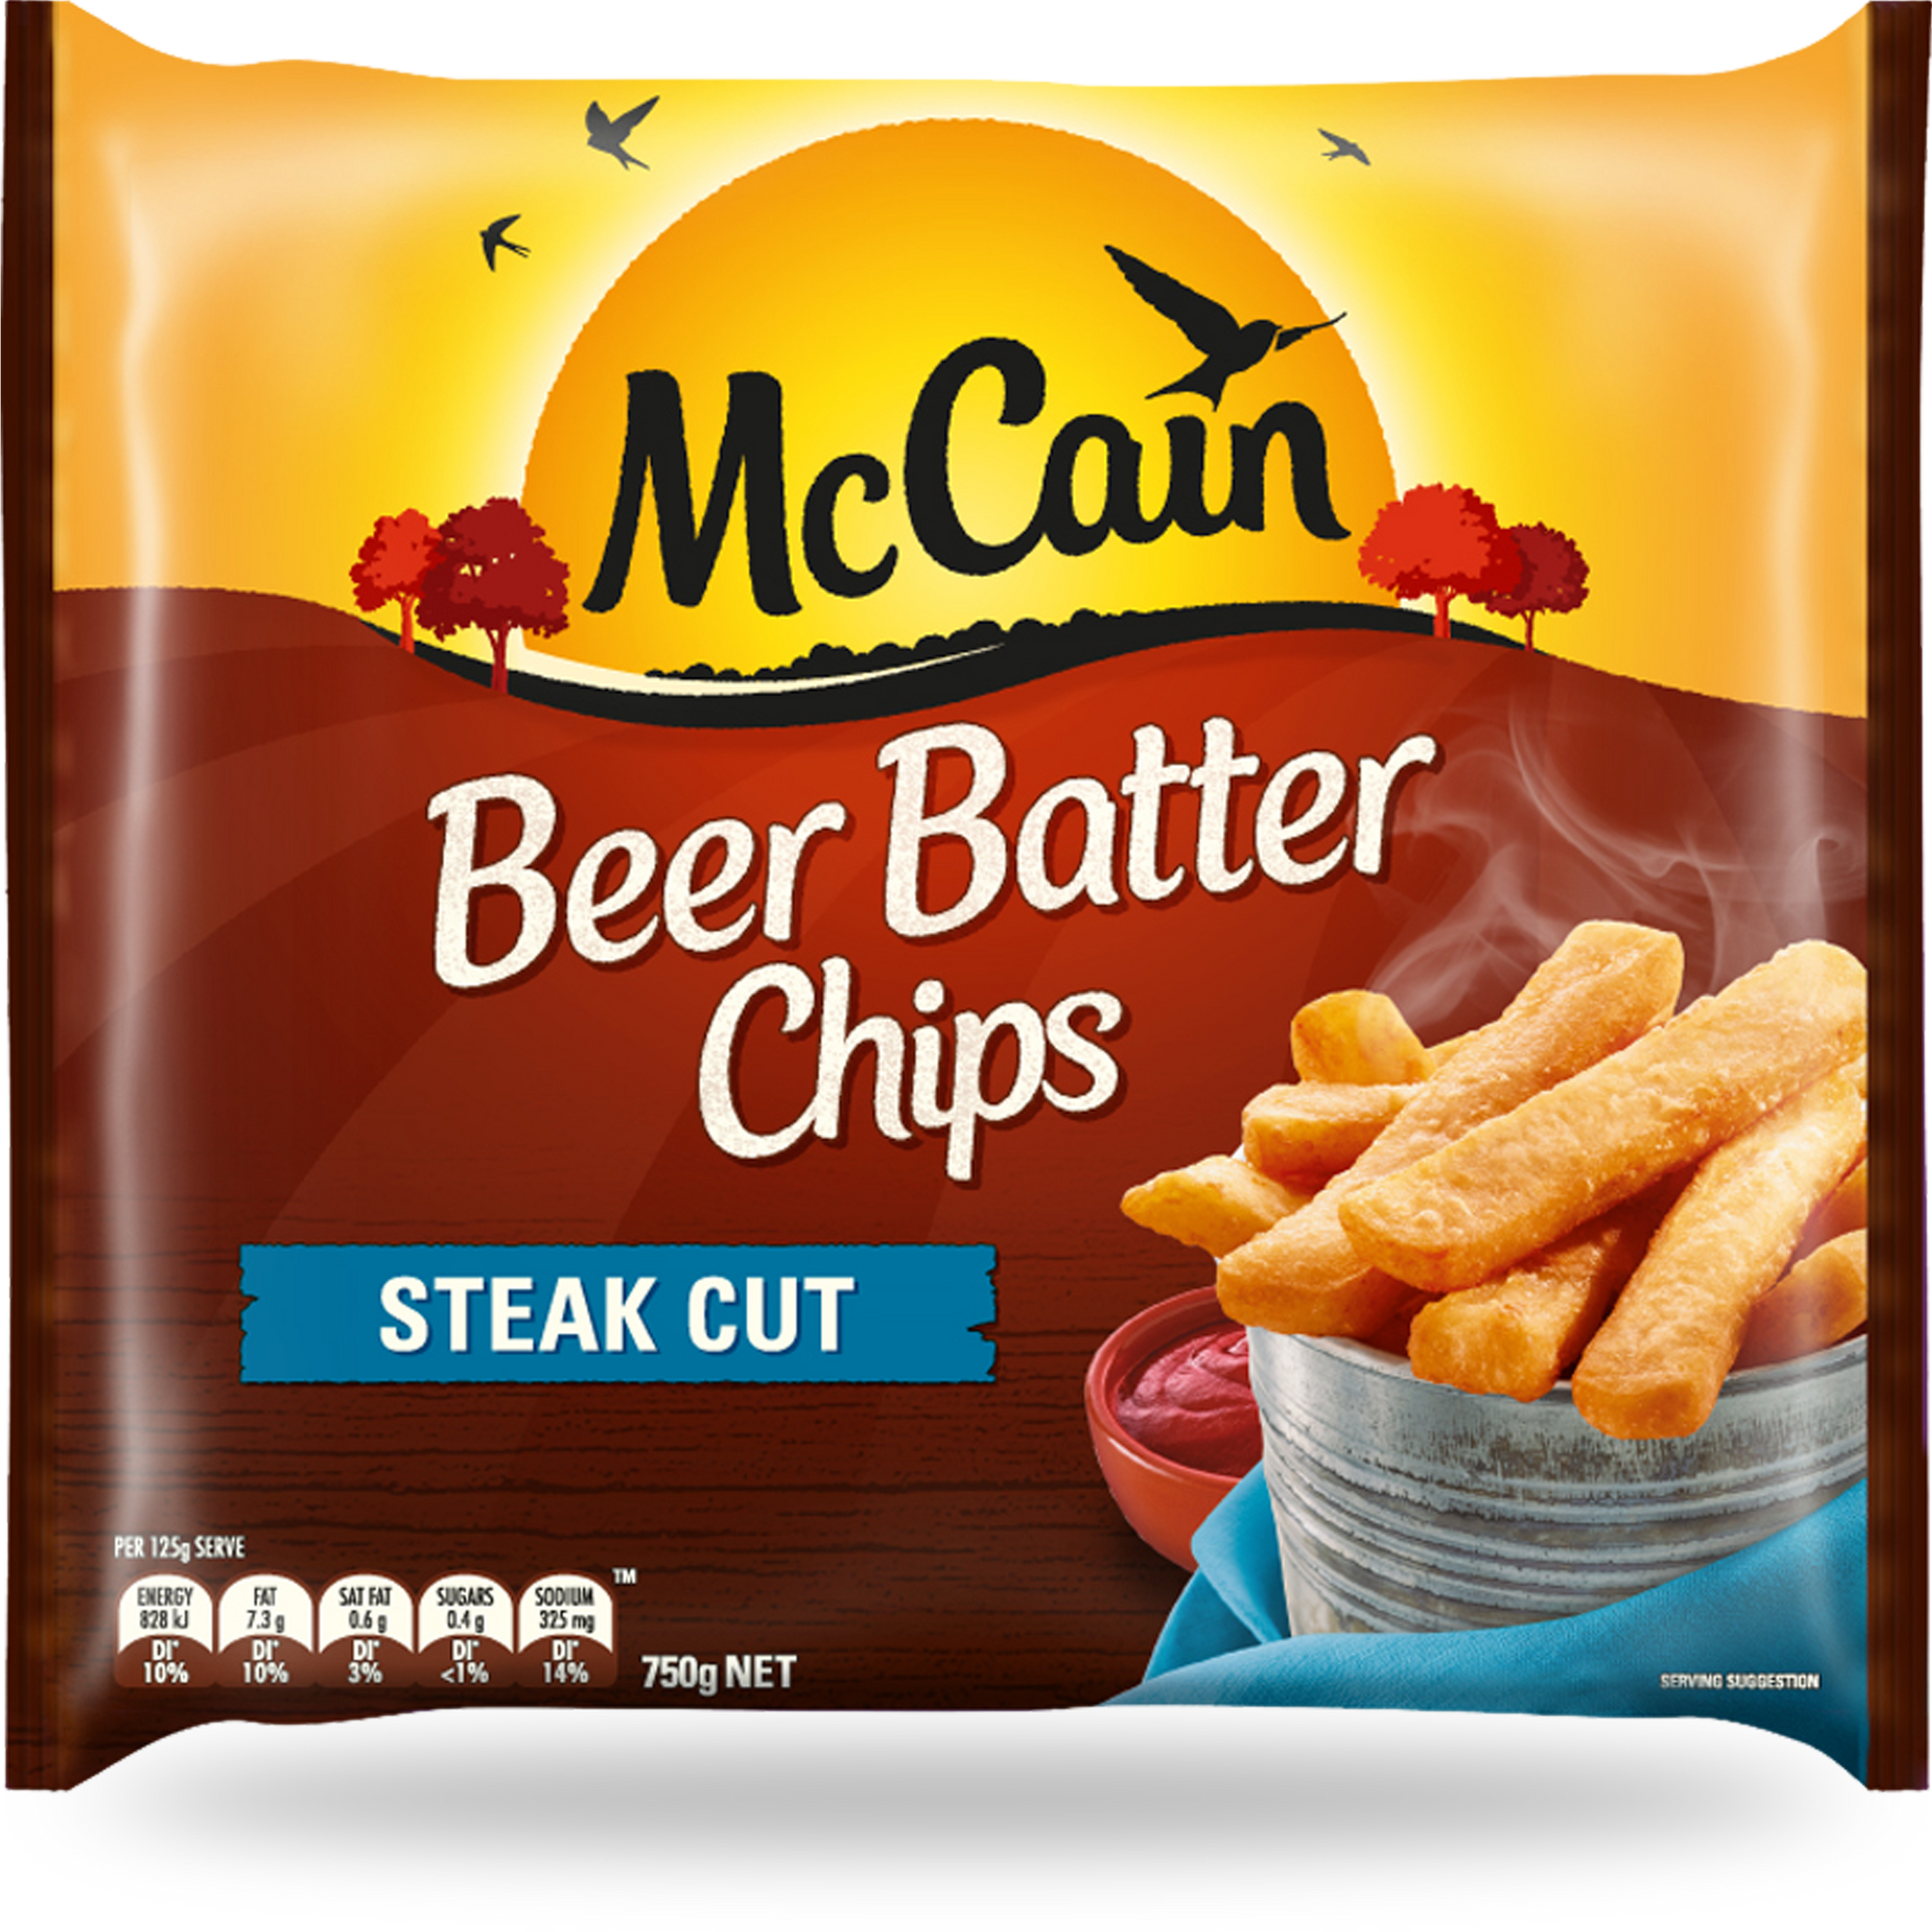 McCain Steak Cut Beer Batter Chips 750g